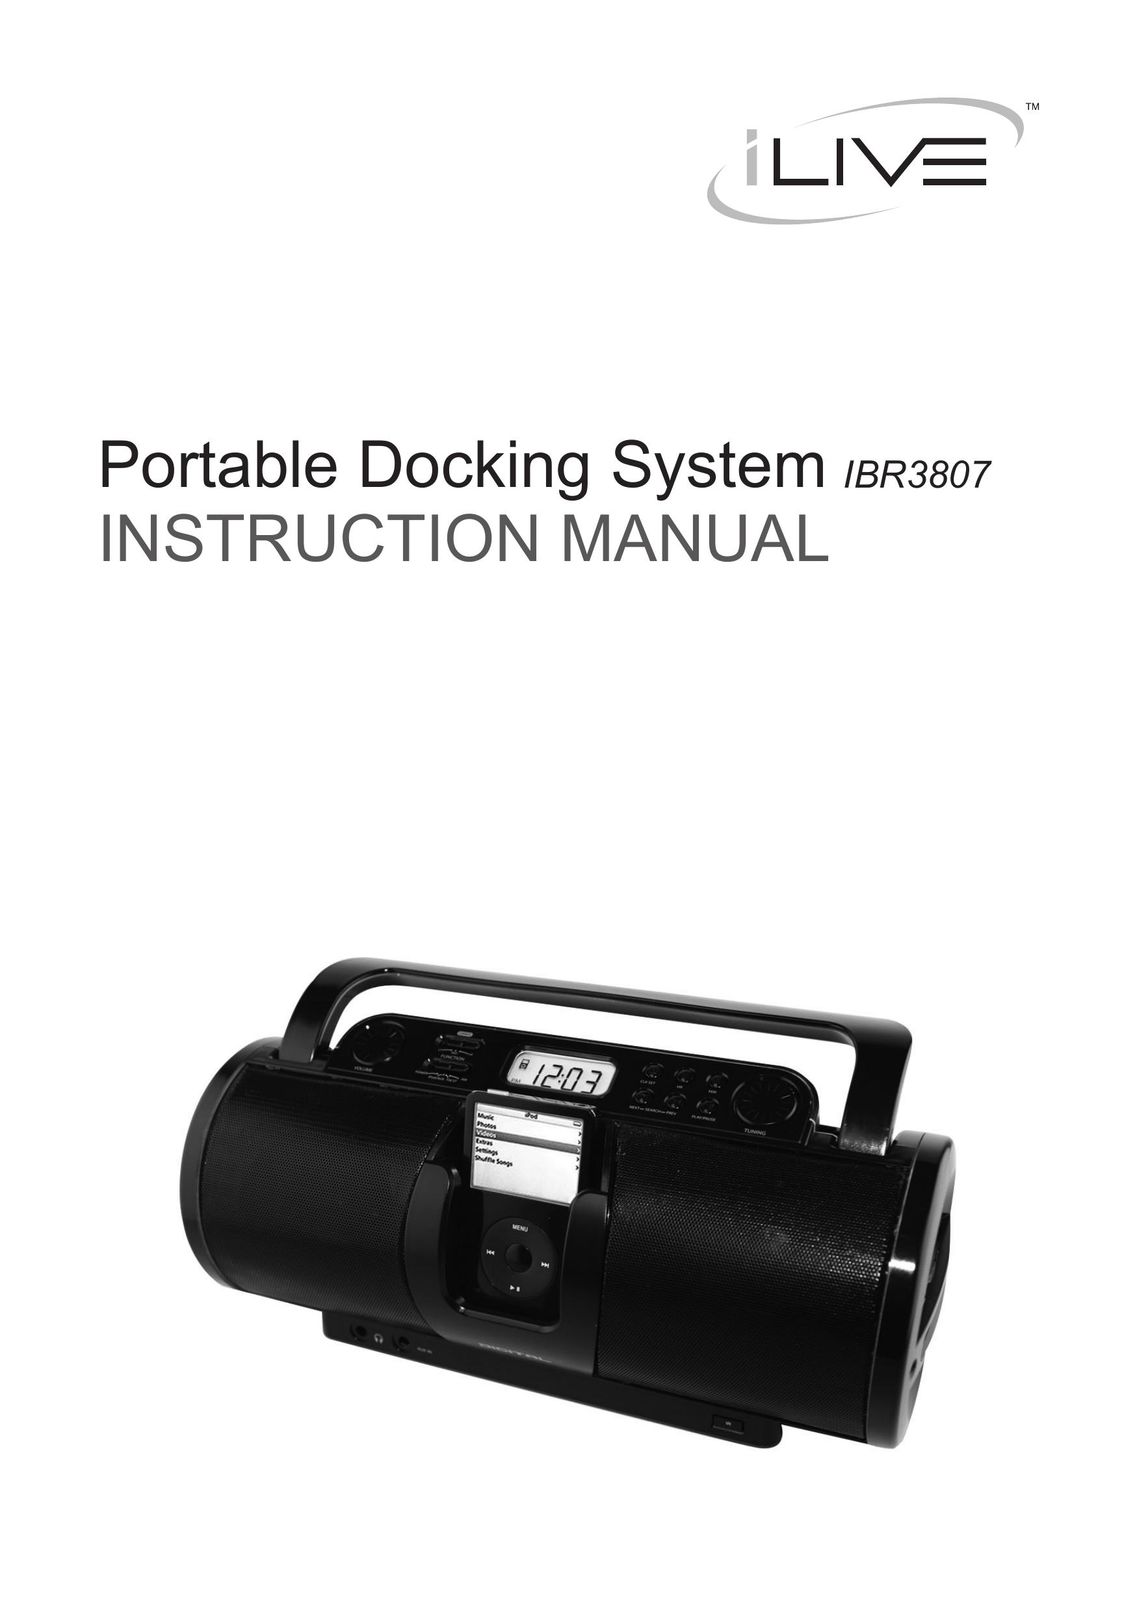 iLive IBR3807 MP3 Docking Station User Manual